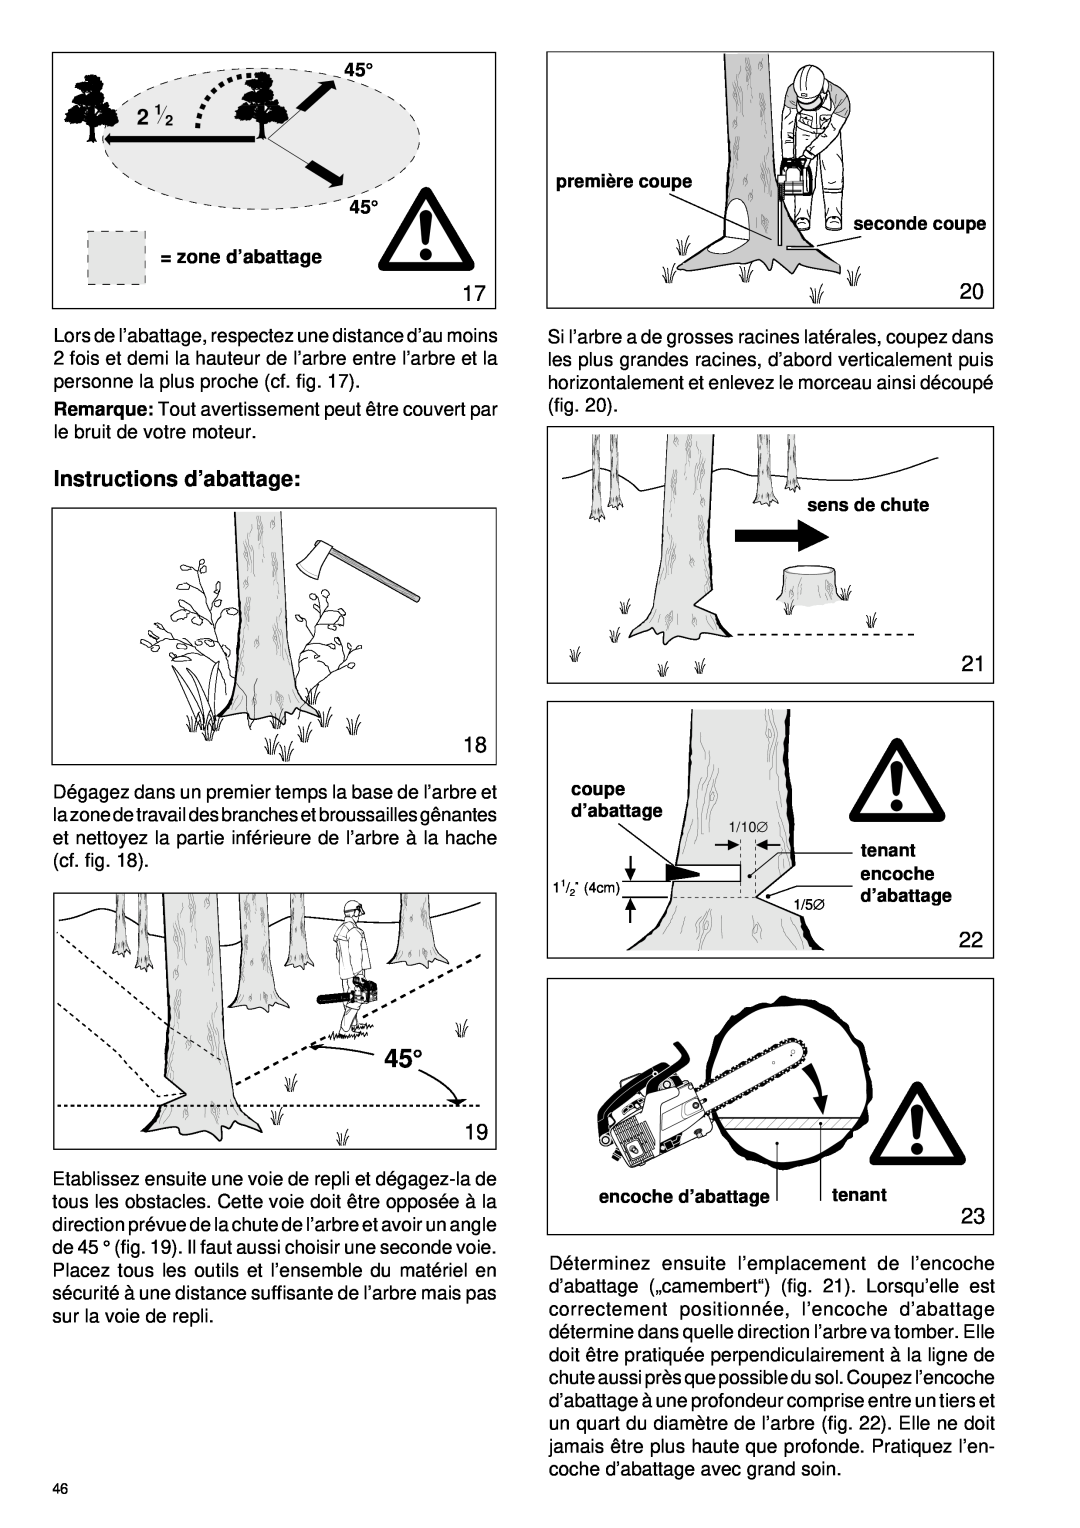 Makita DCS 330 TH instruction manual Instructions d’abattage, 45 = zone d’abattage 